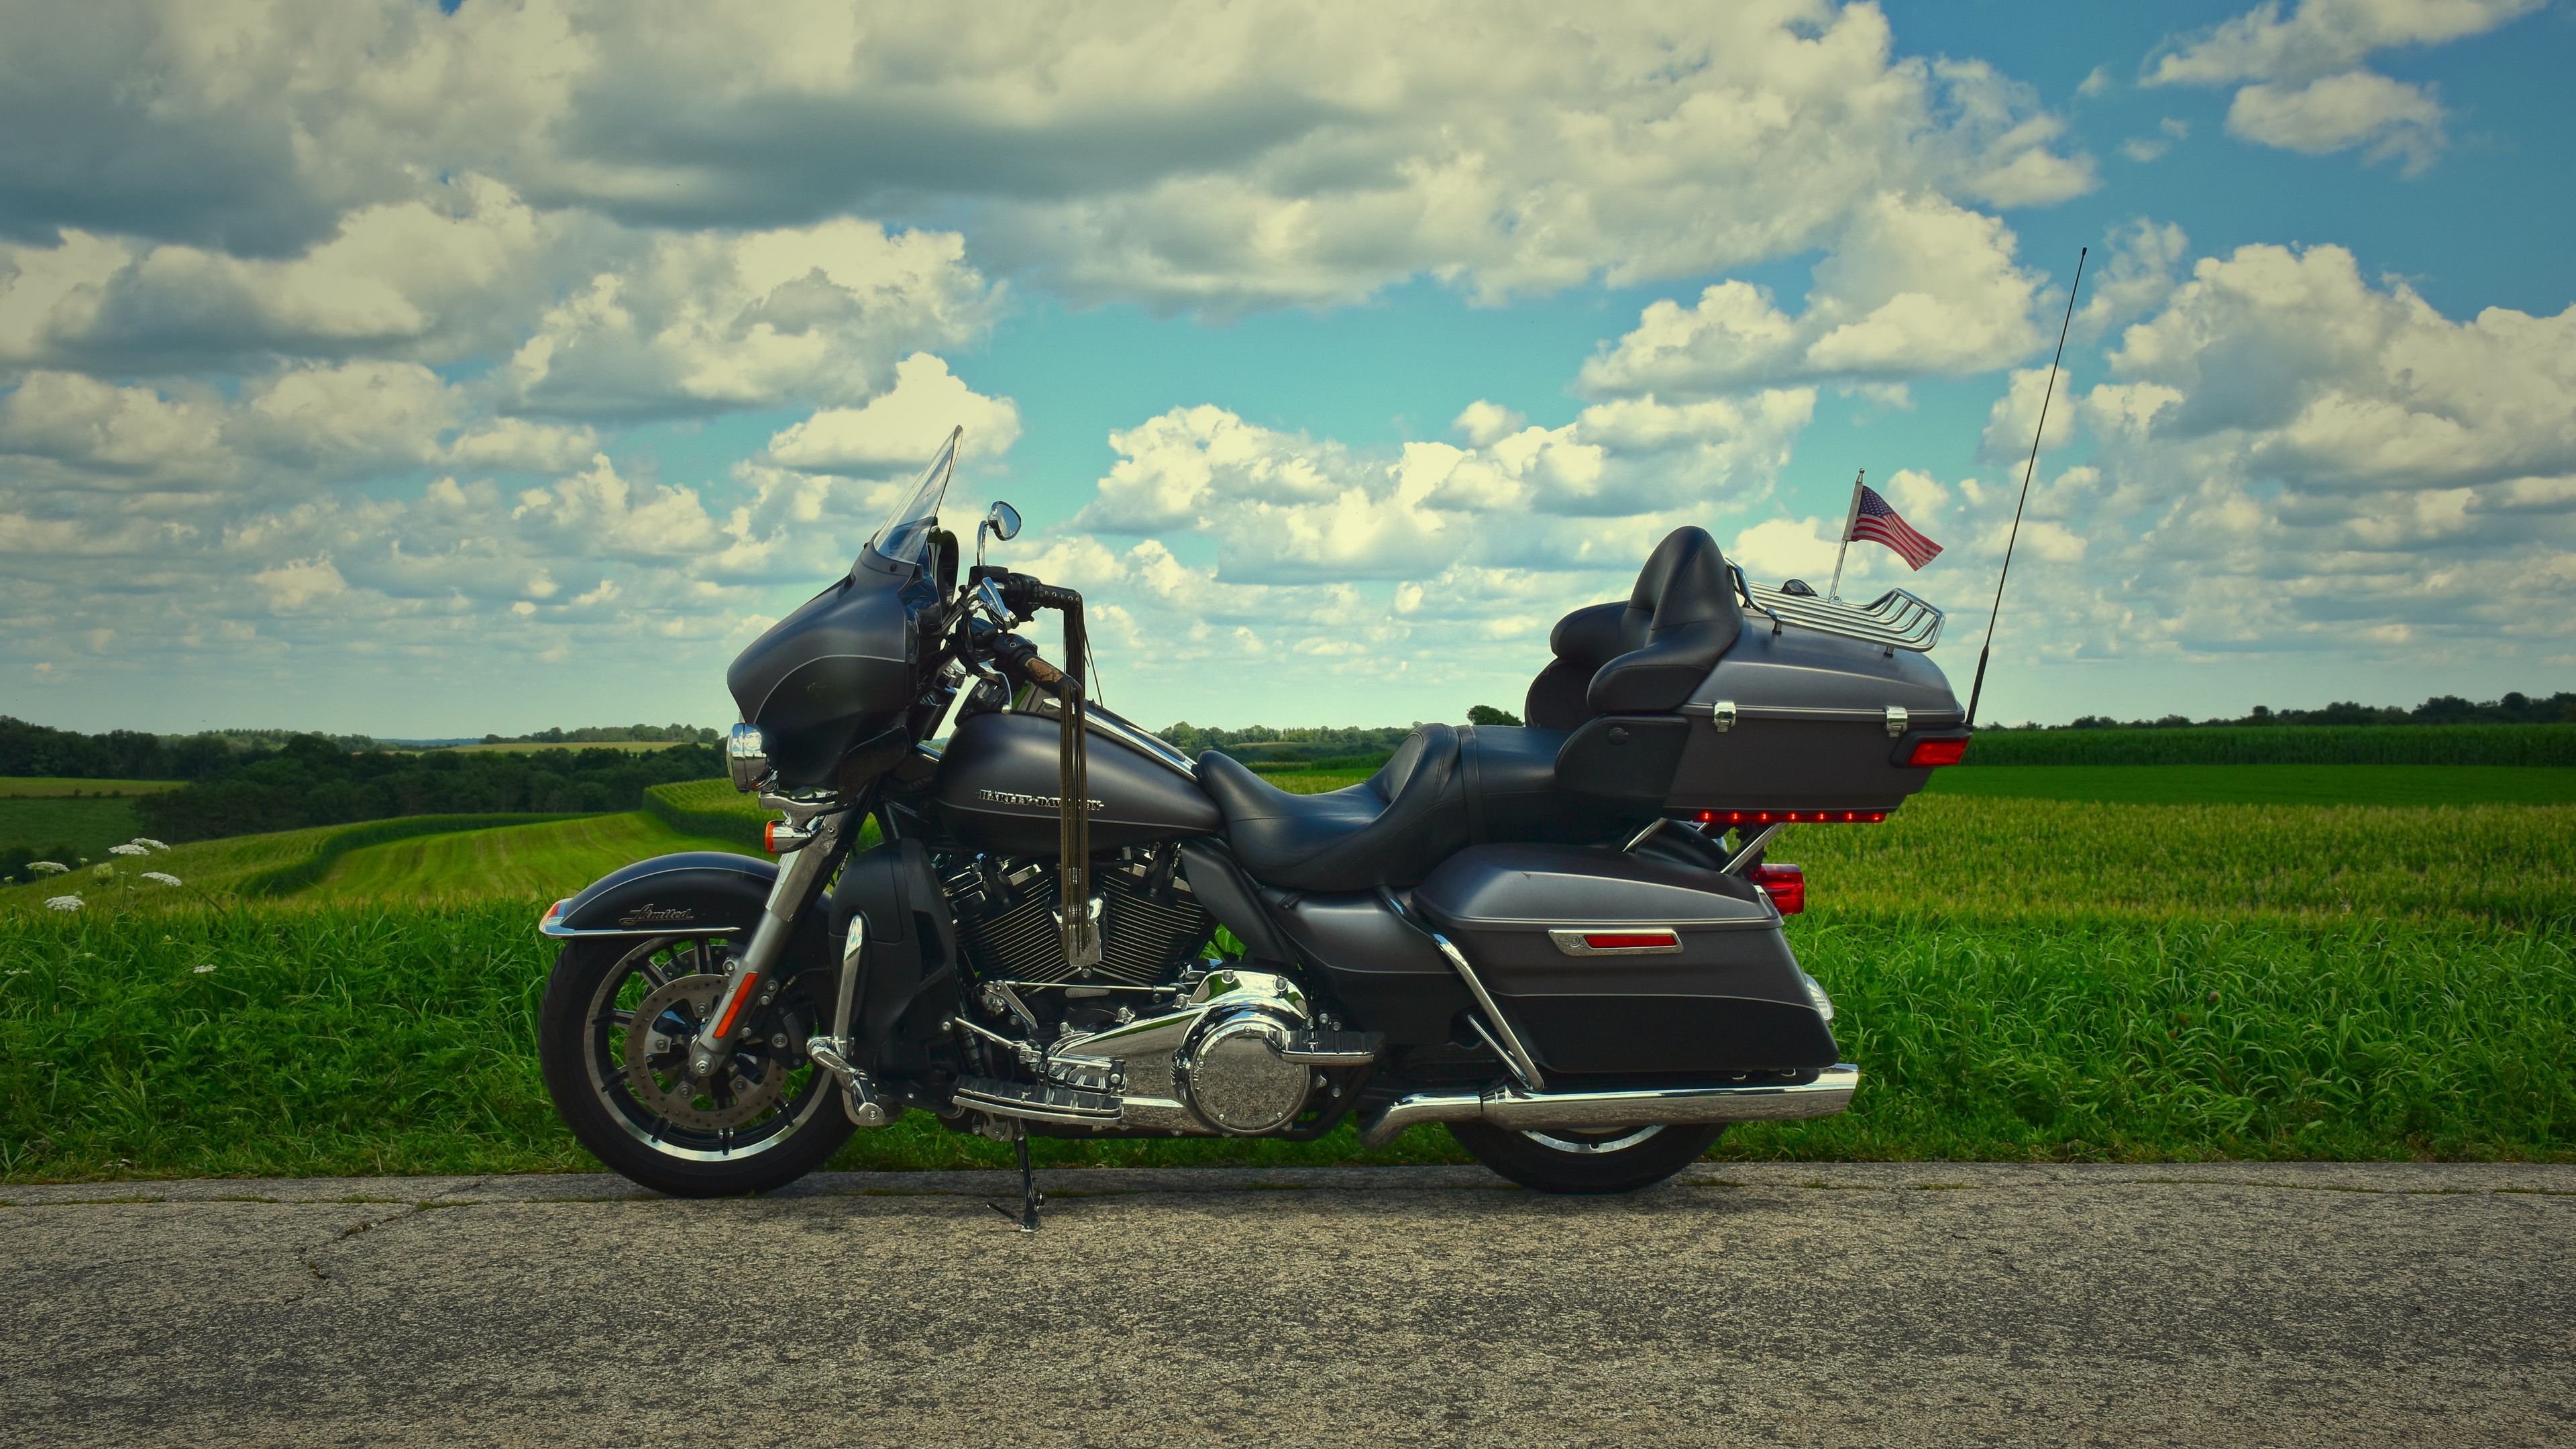 Download Wallpaper 3840x2160 Harley Davidson, Bike, Motorcycle, Travel, Road, Clouds 4k Uhd 16:9 HD Background